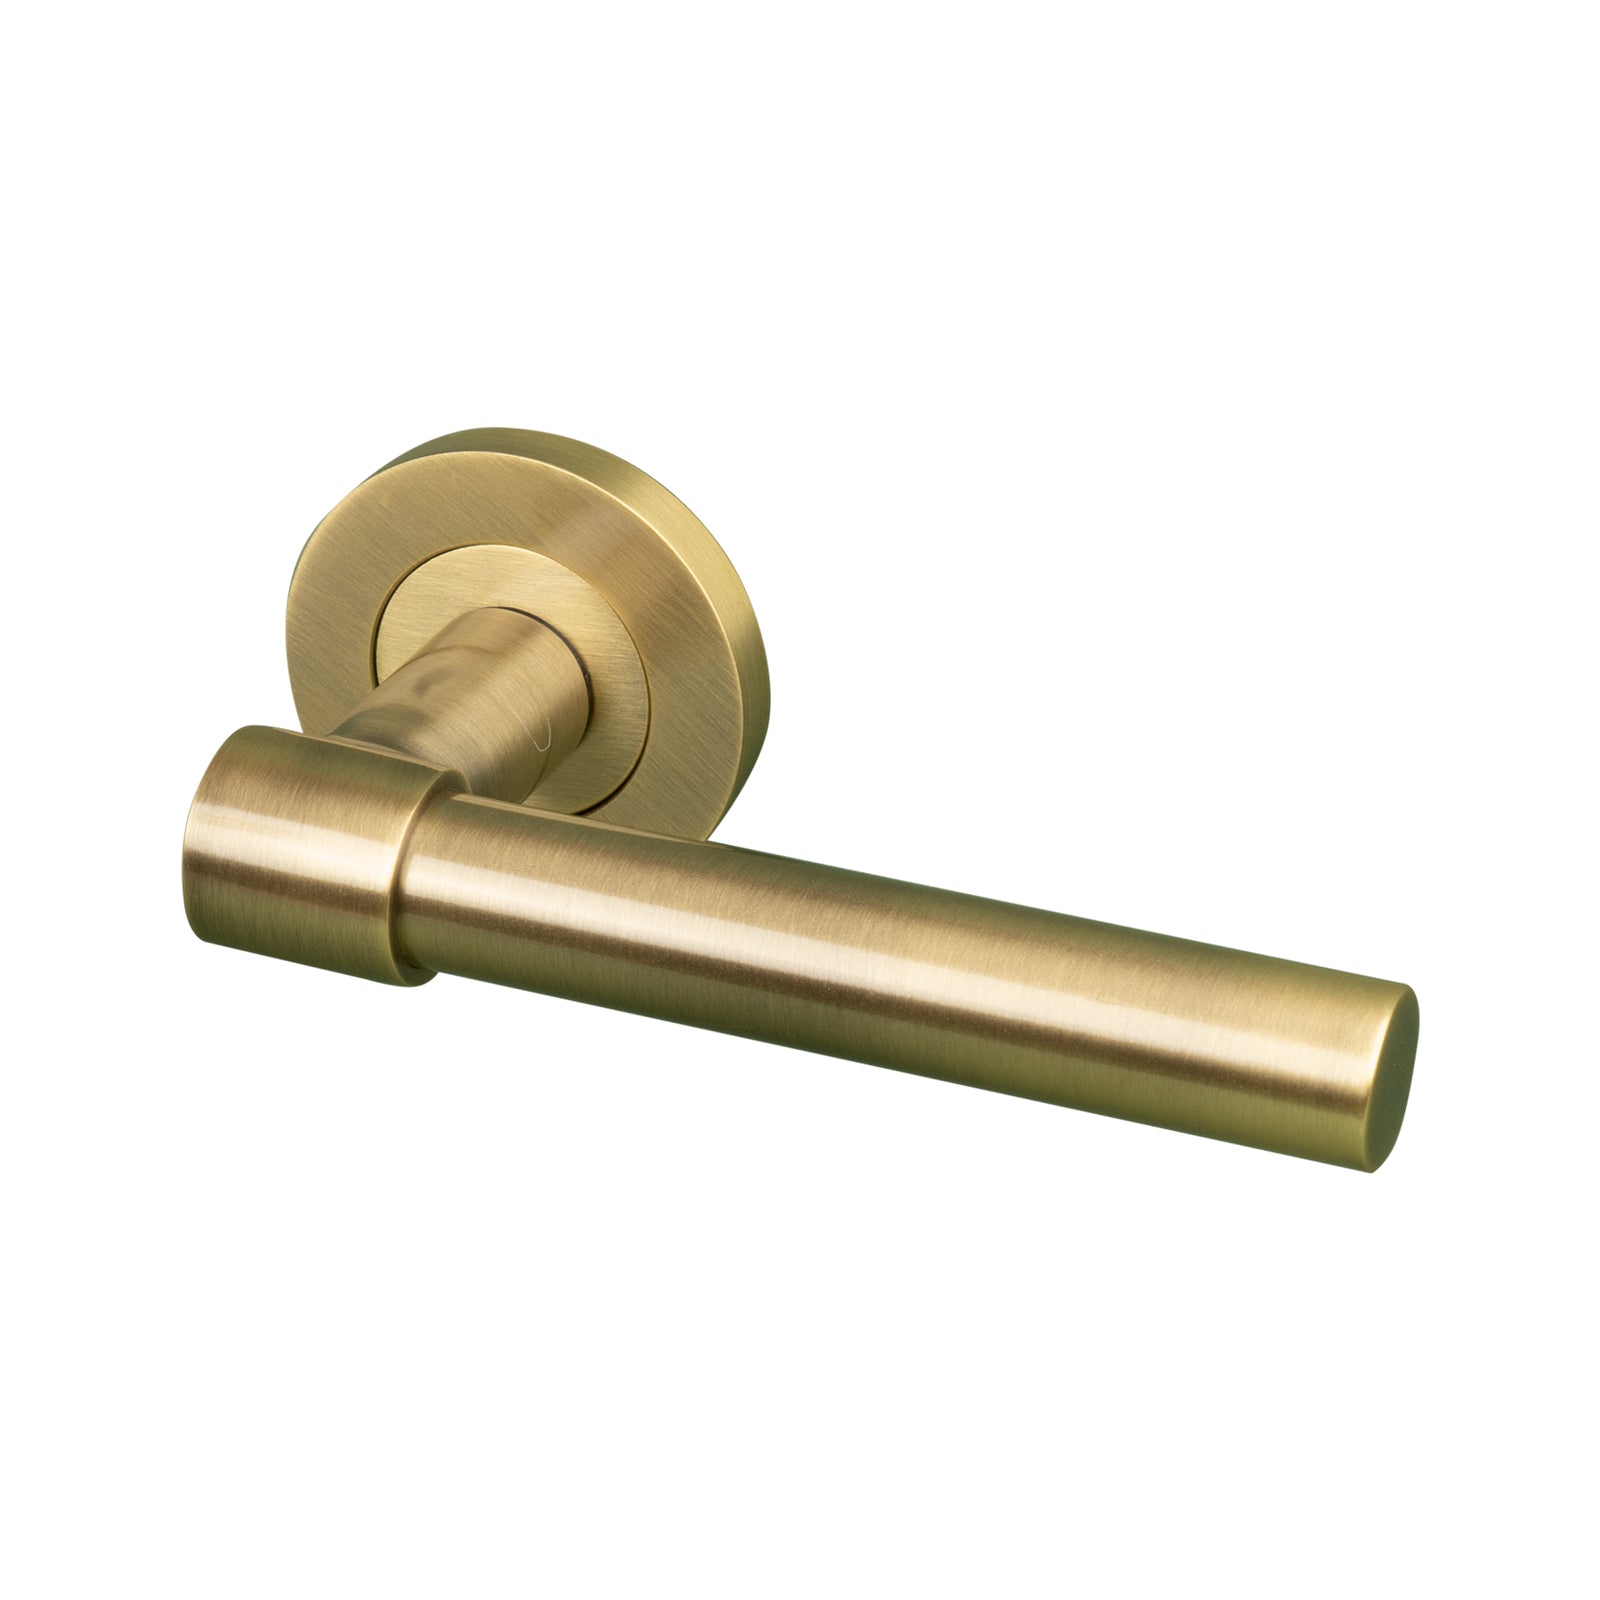 aged brass round rose lever door handle, soldi brass handles SHOW